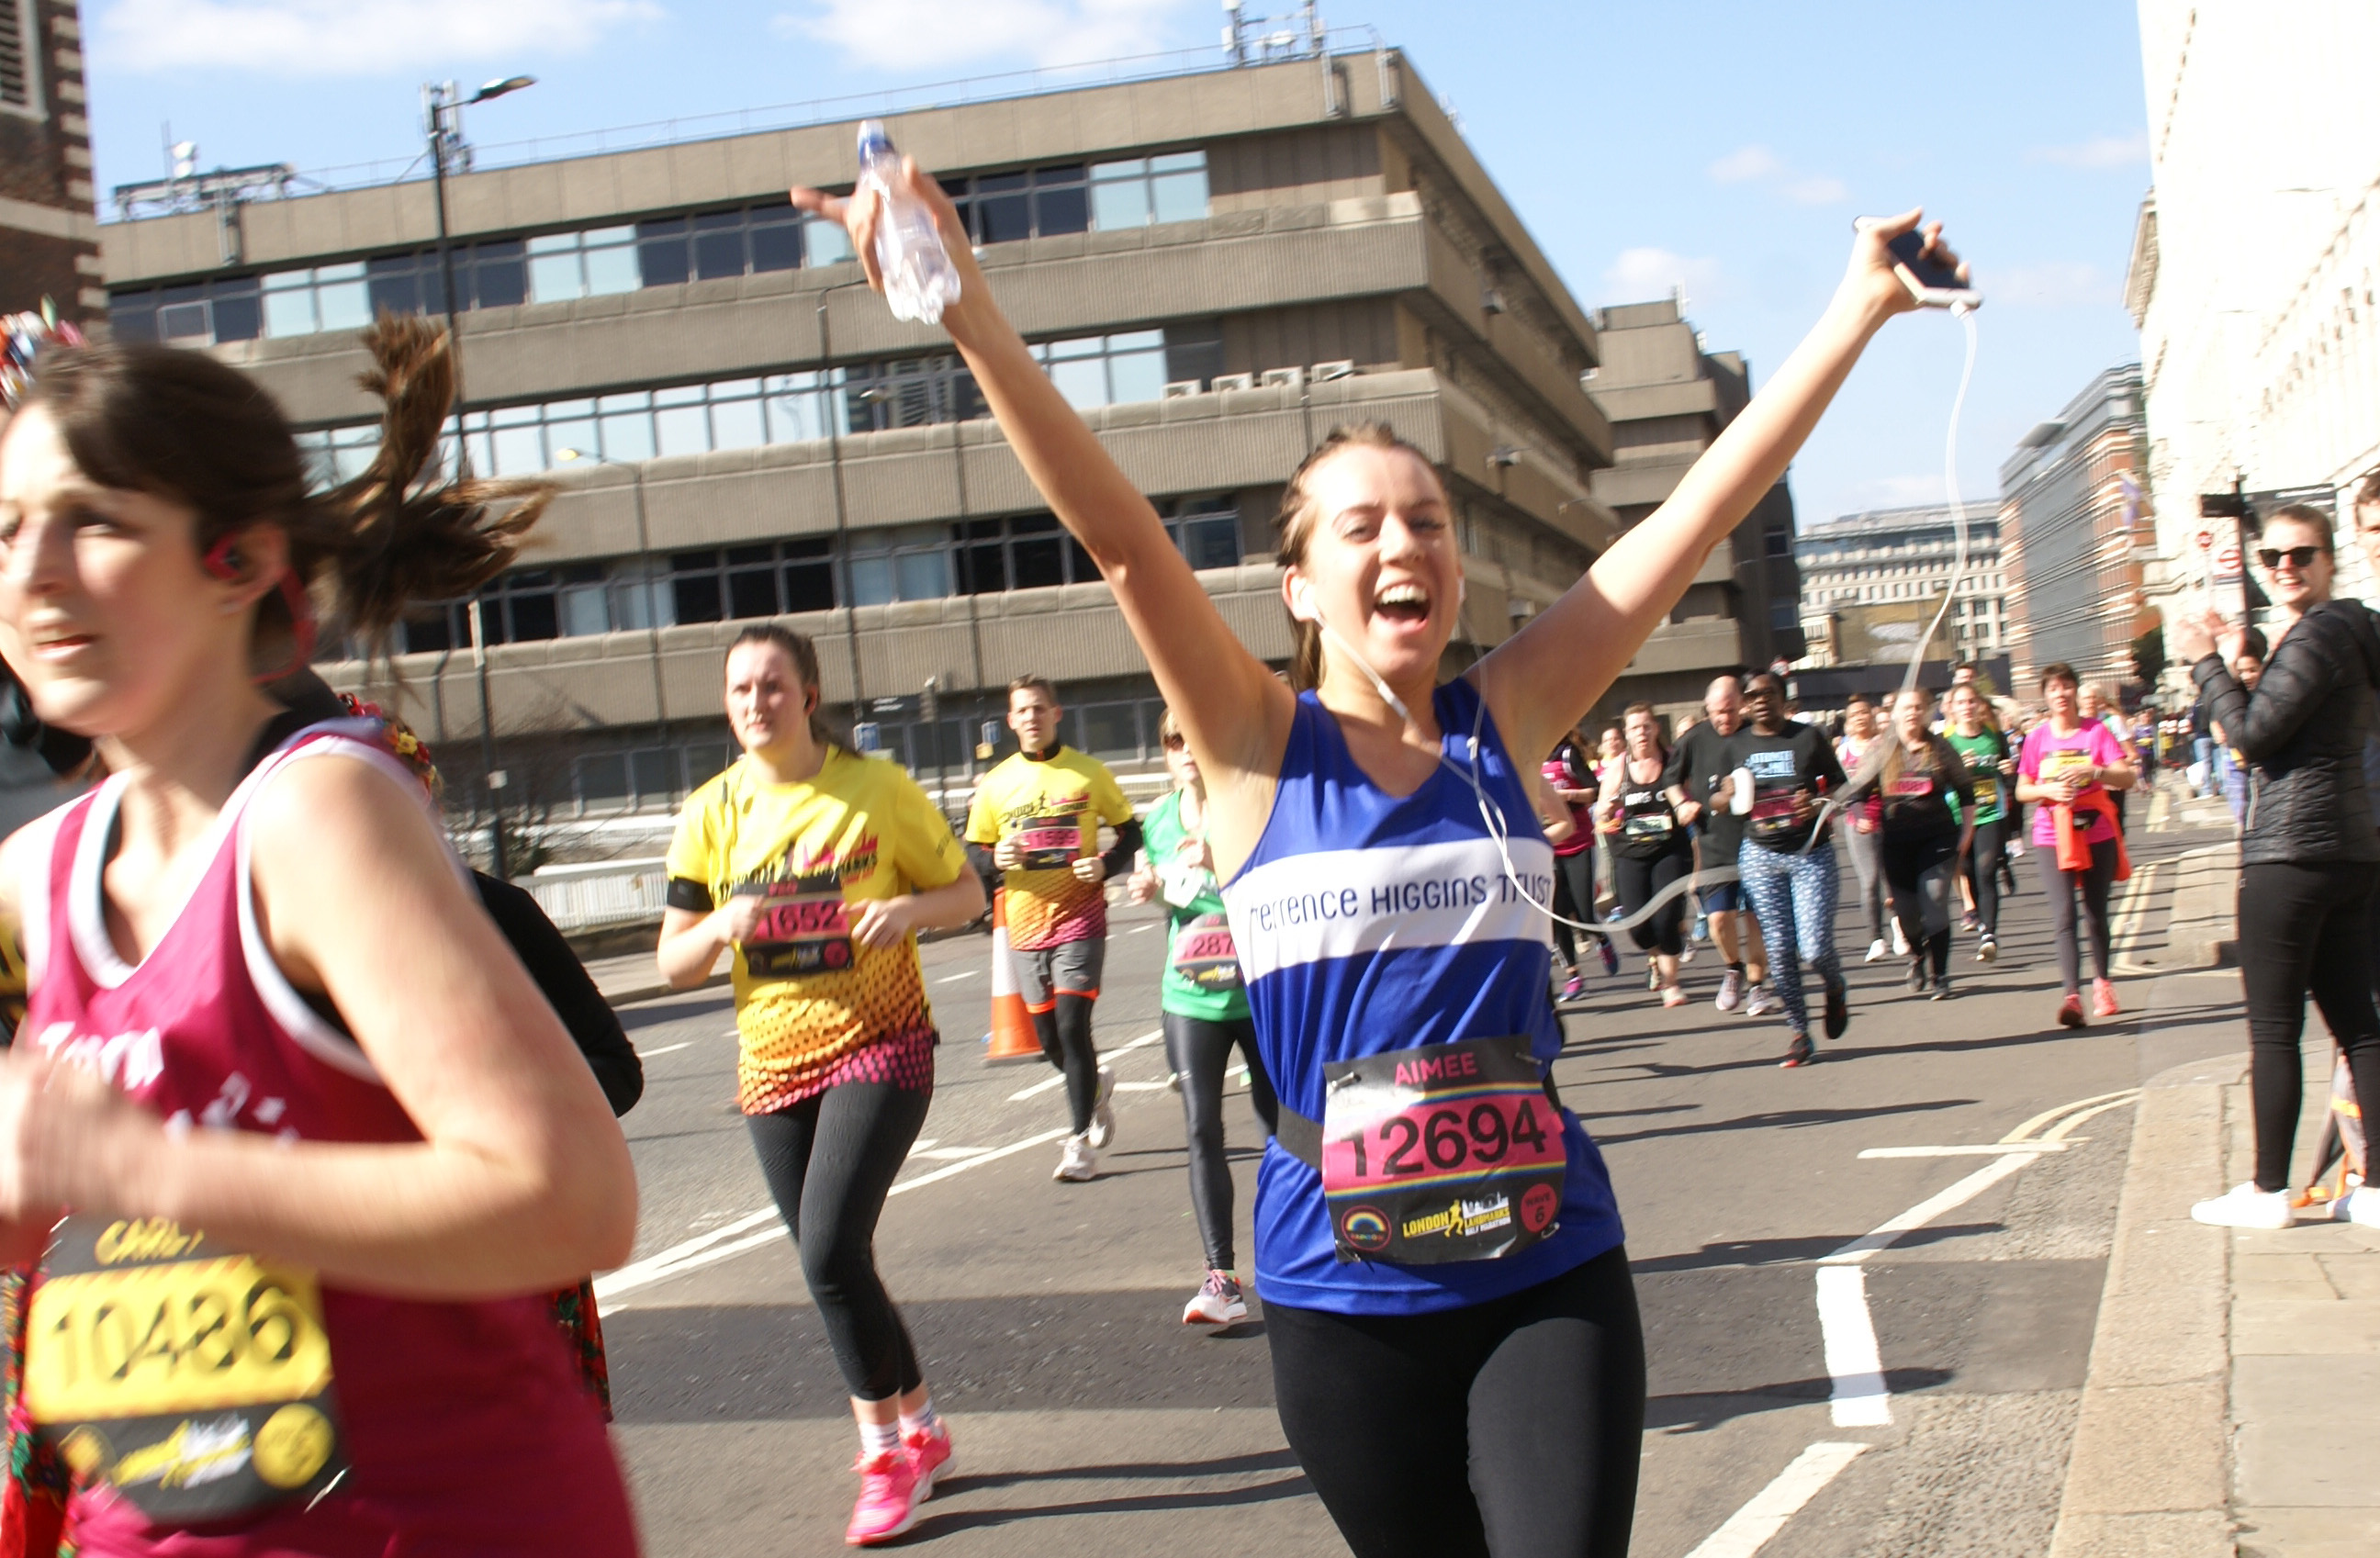 London Landmarks Half Marathon runner